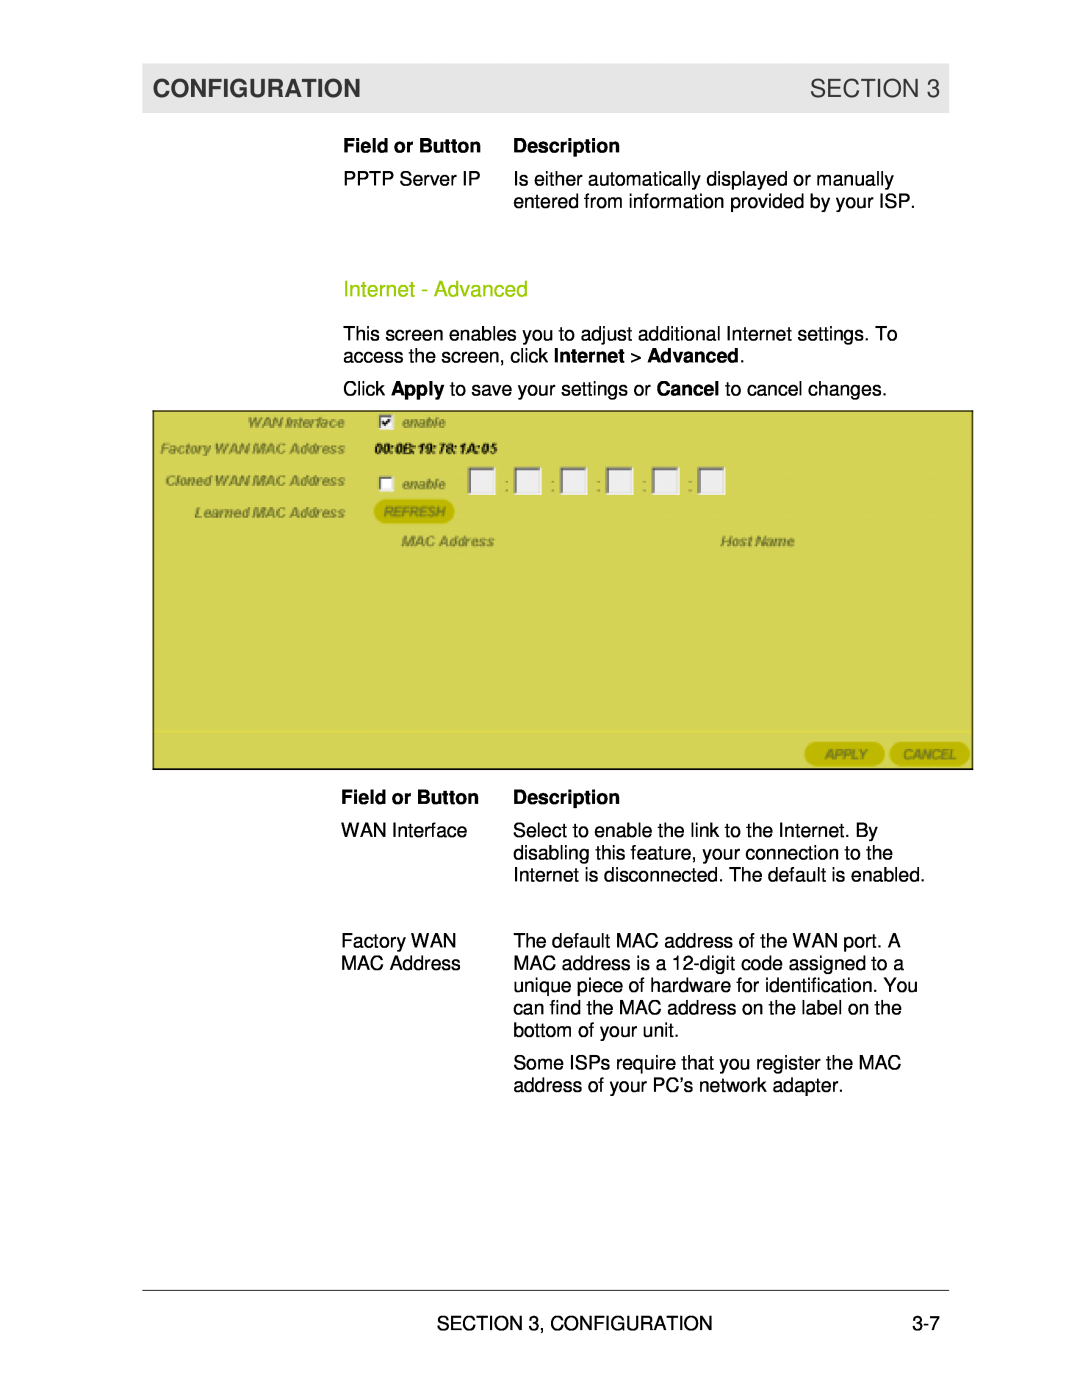 Motorola WR850G manual Internet - Advanced, Configuration, Section, Field or Button, Description 